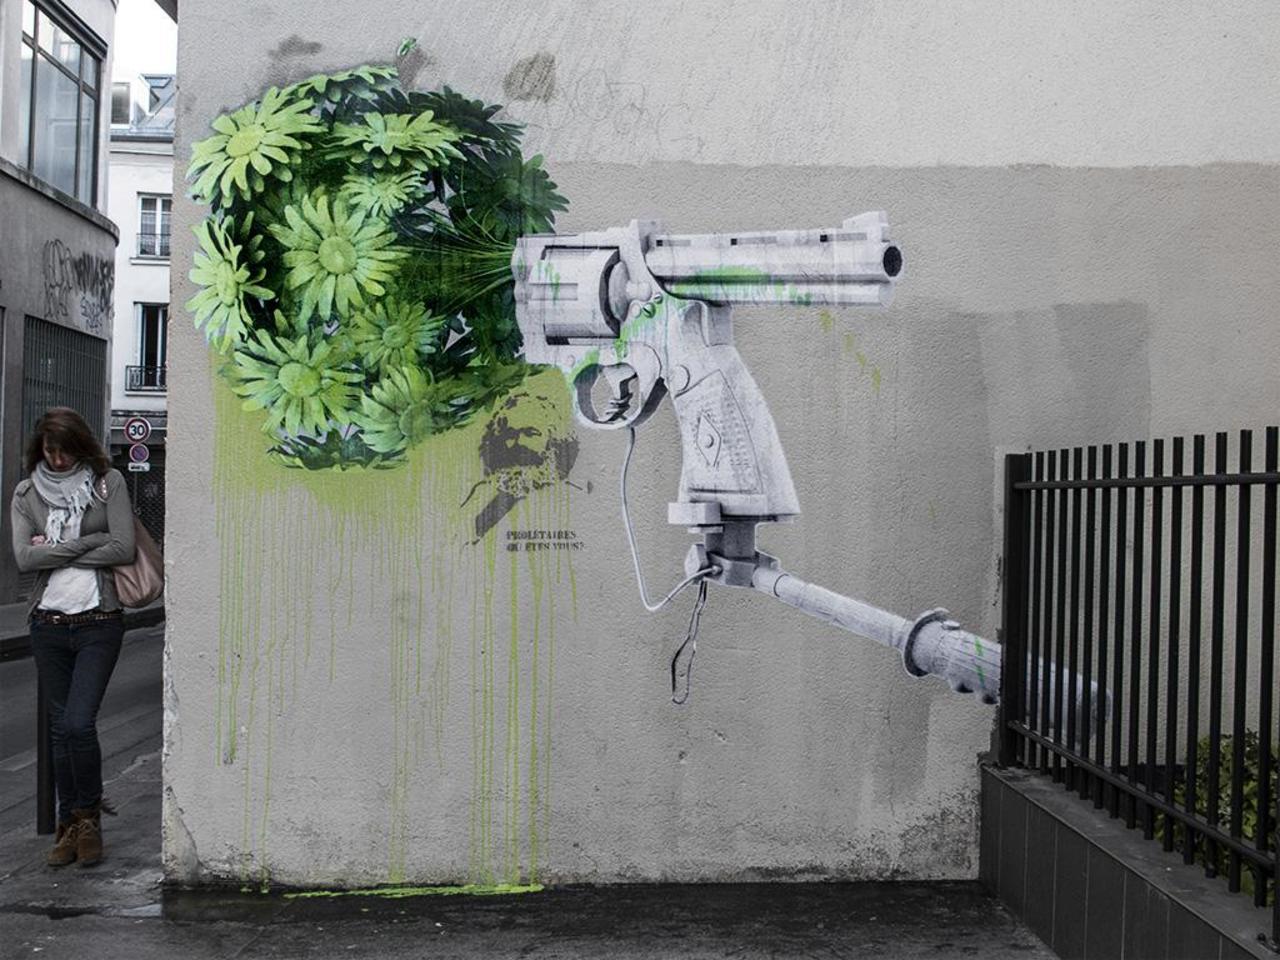 "Self-Portrait", a new street piece by Ludo in Paris, France. #StreetArt #Graffiti #Mural http://t.co/AjEUzRFlhv